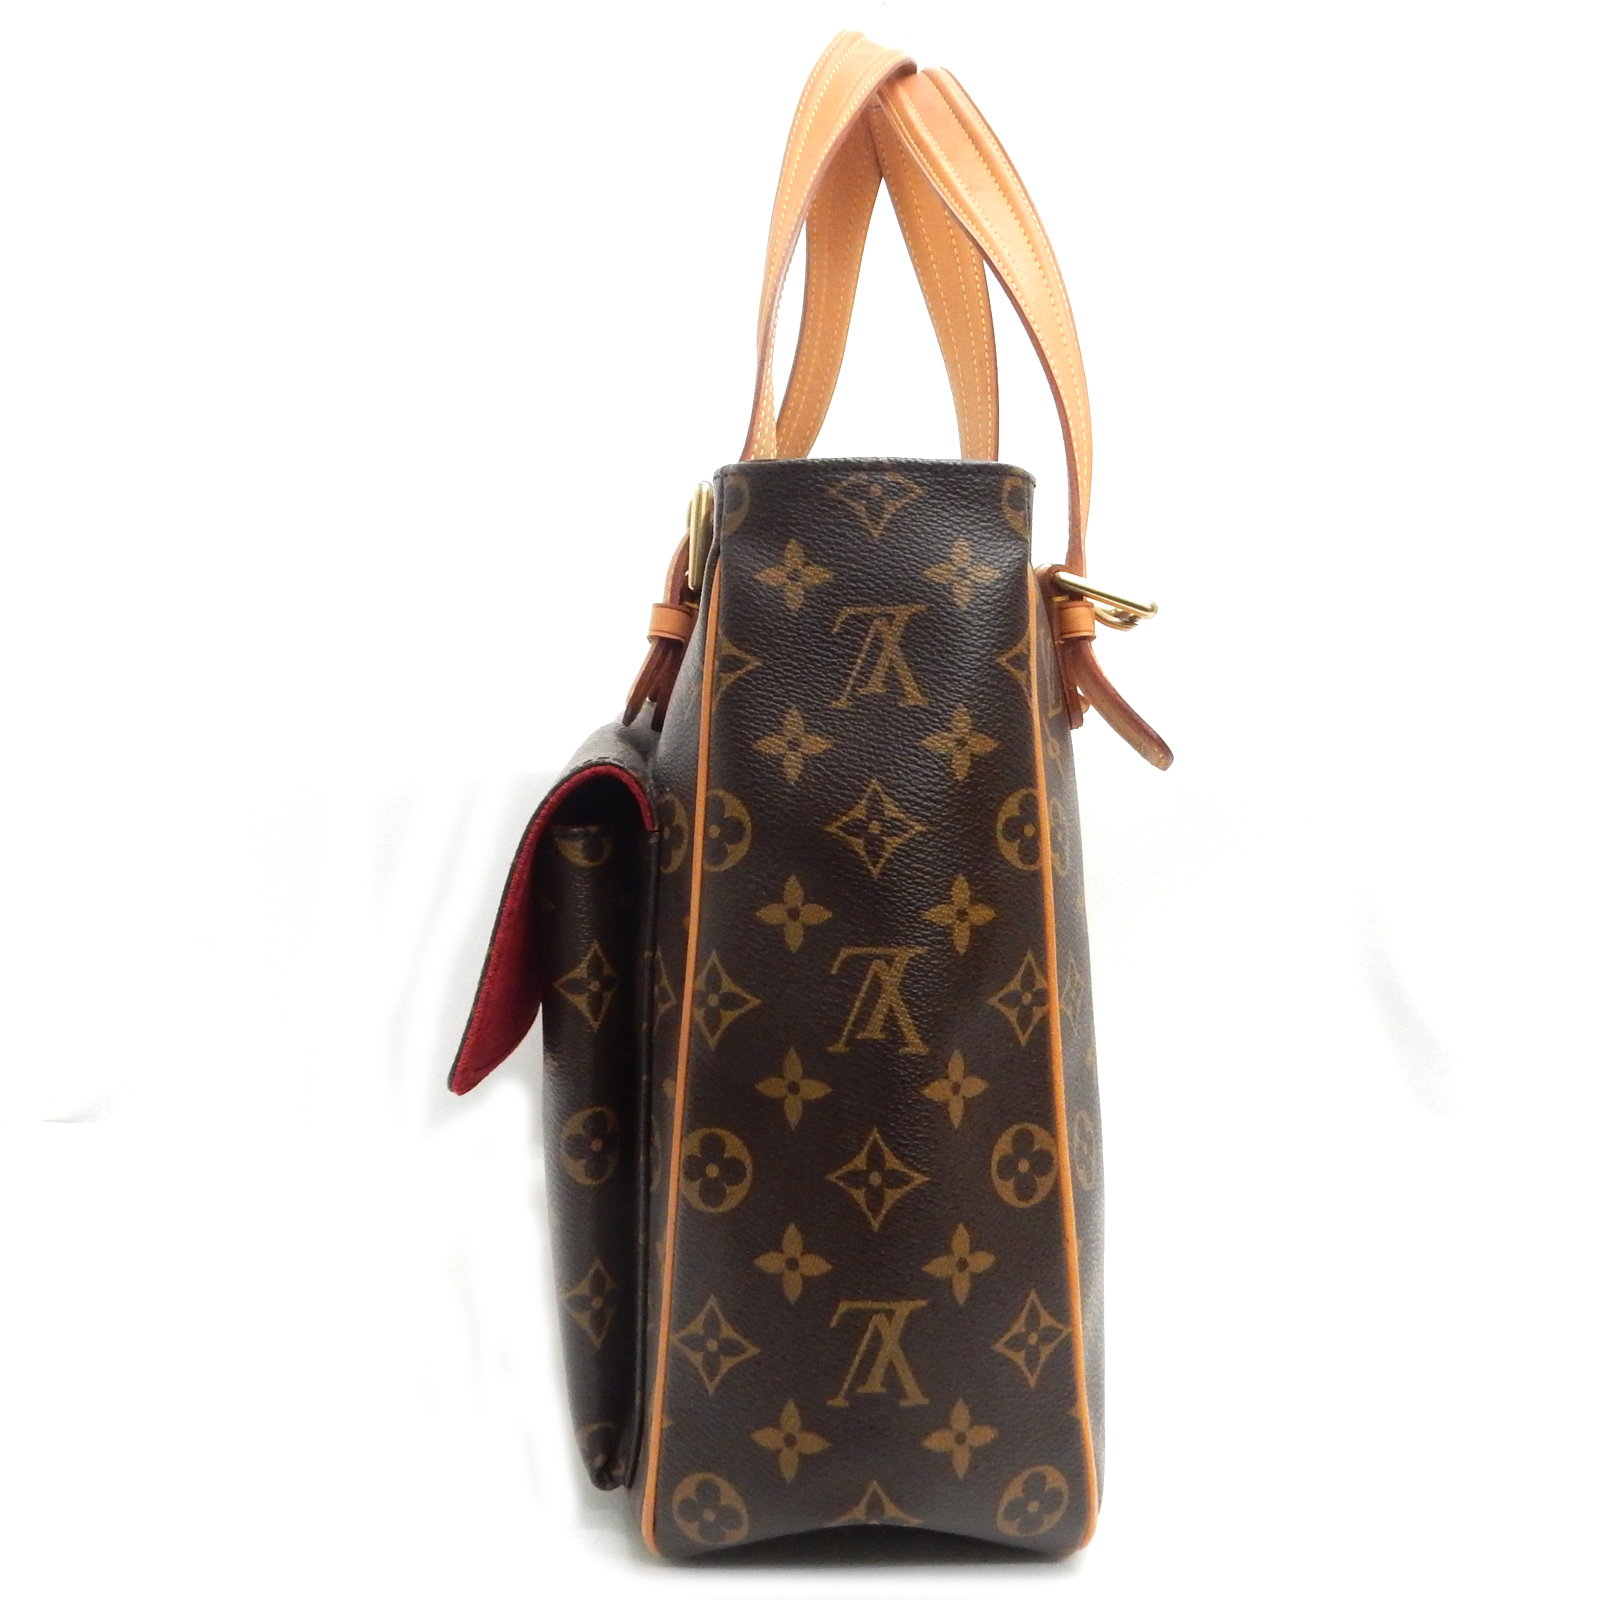 Rise-on LOUIS VUITTON MONOGRAM Multipli Cite Tote Bag Shoulder Bag Handbag #30 | eBay